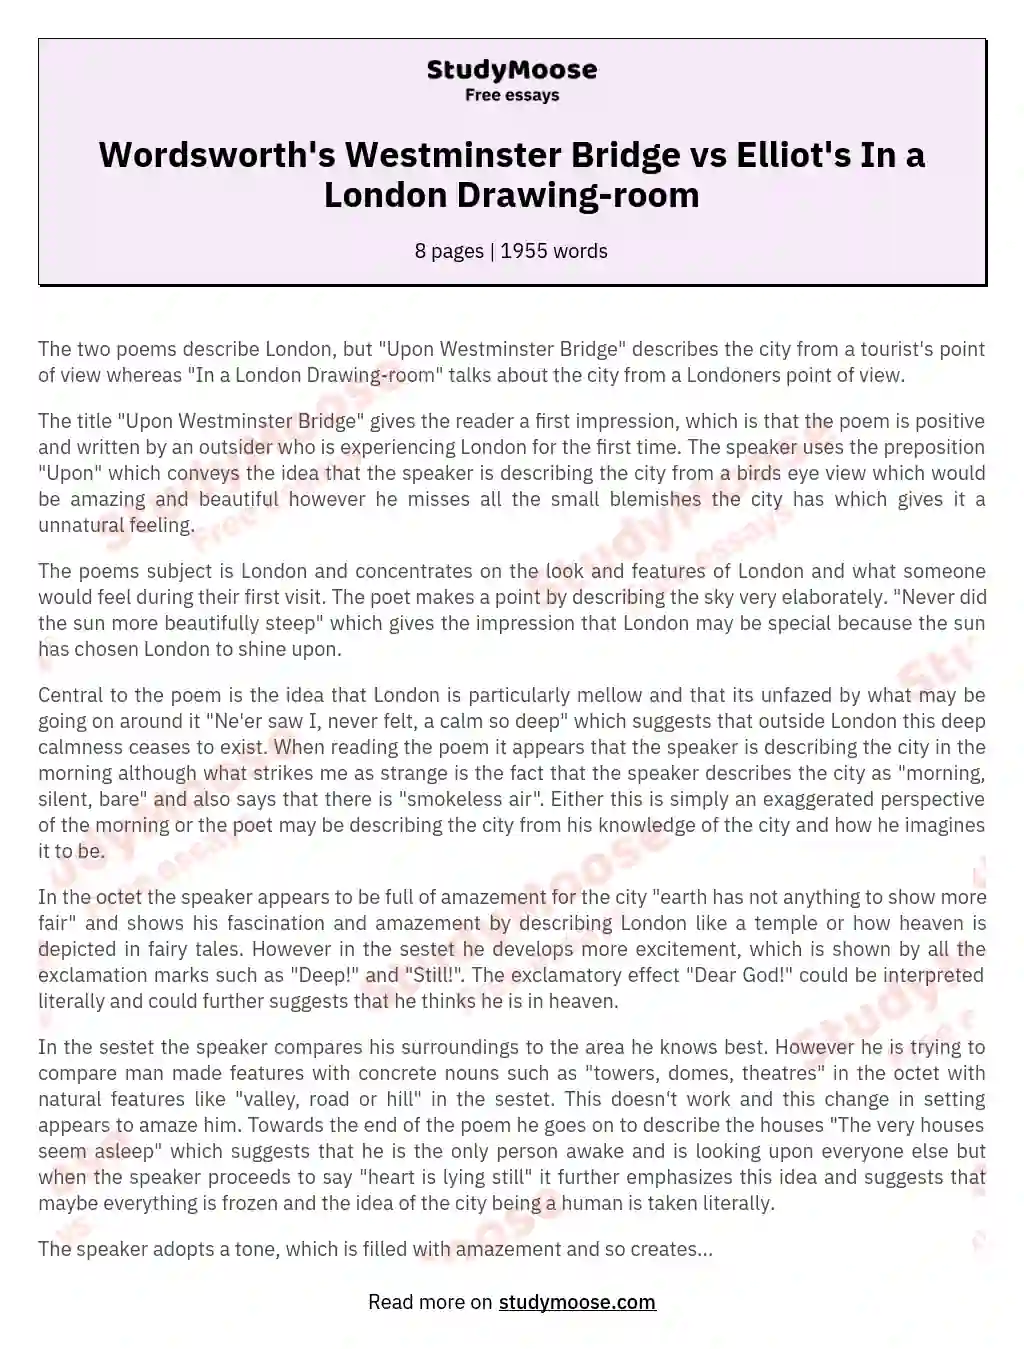 Wordsworth's Westminster Bridge vs Elliot's In a London Drawing-room essay